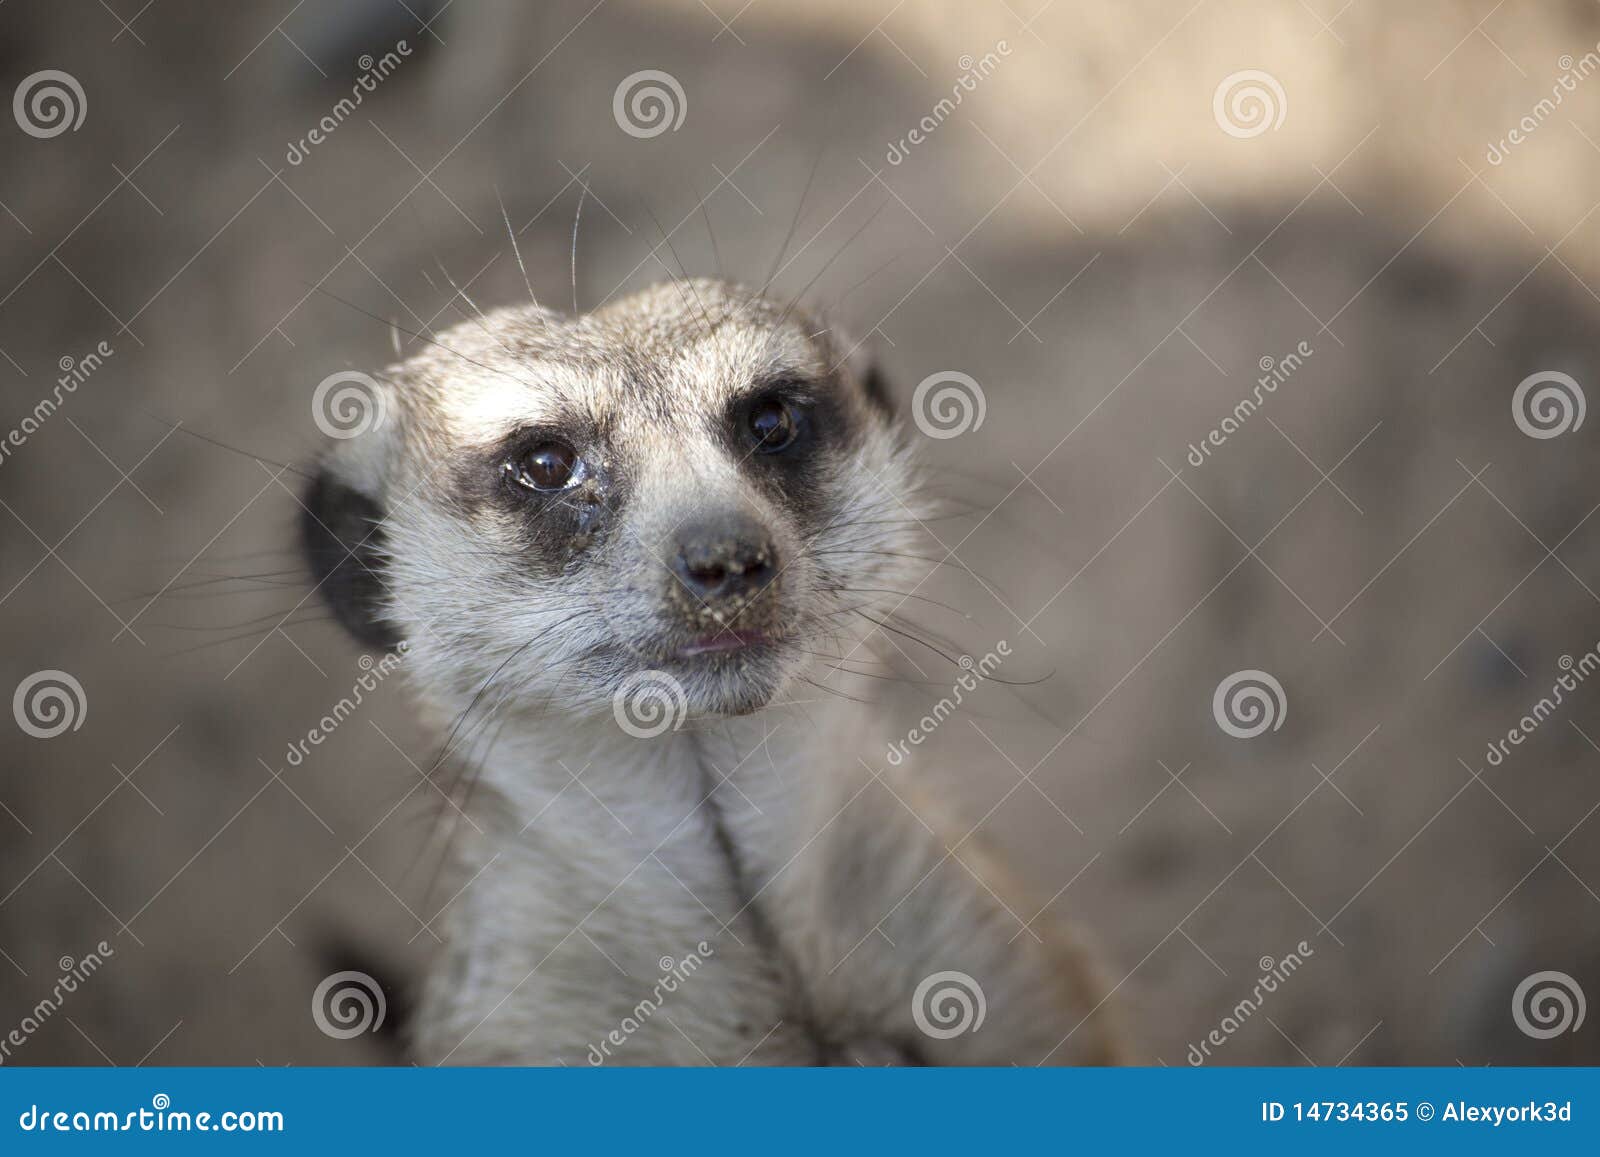 meerkat (suricate) close-up